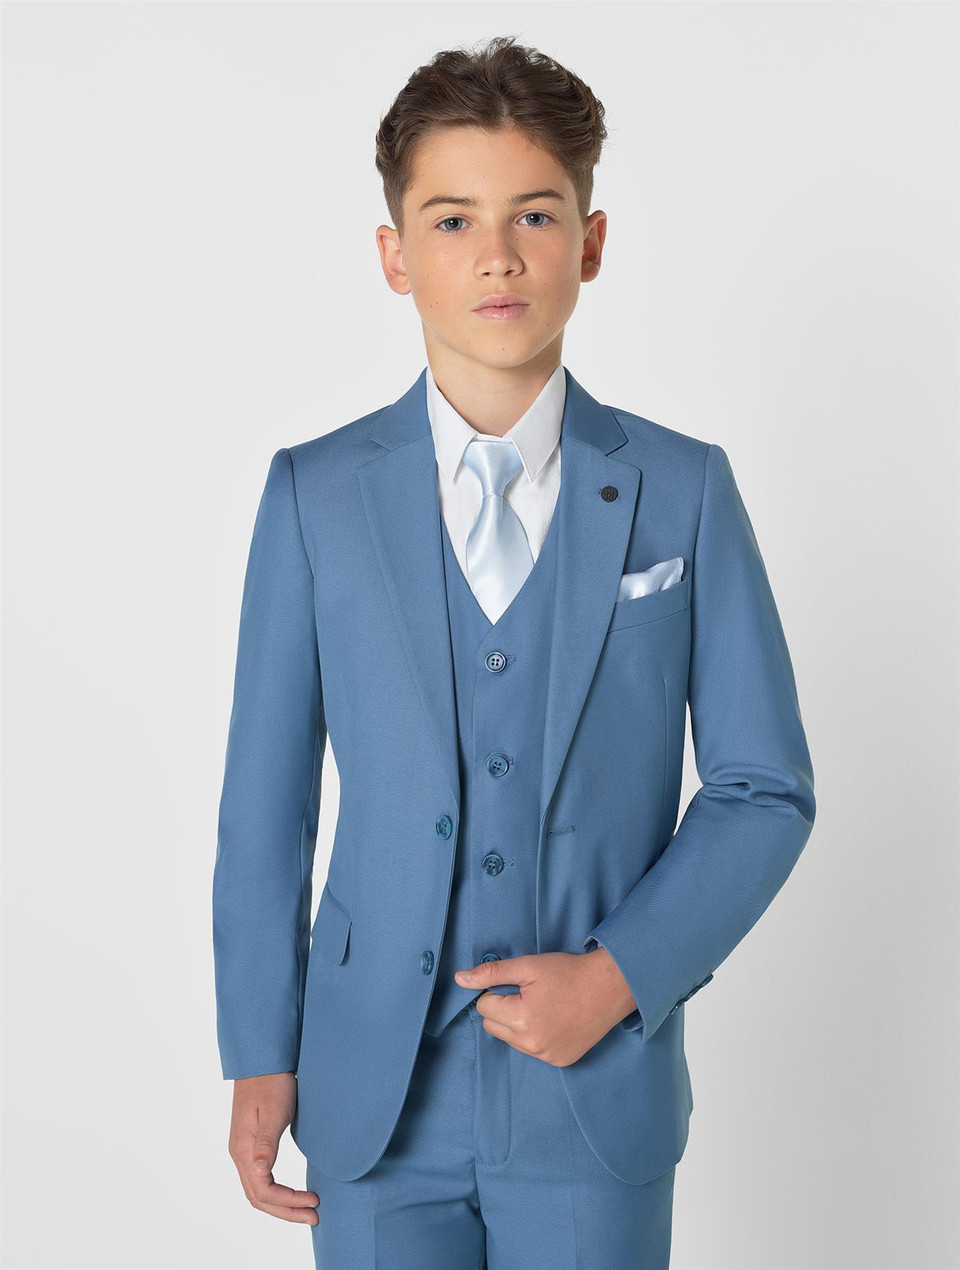 Boys Suits | Kids Page Boy Suits & Boys Wedding Suits